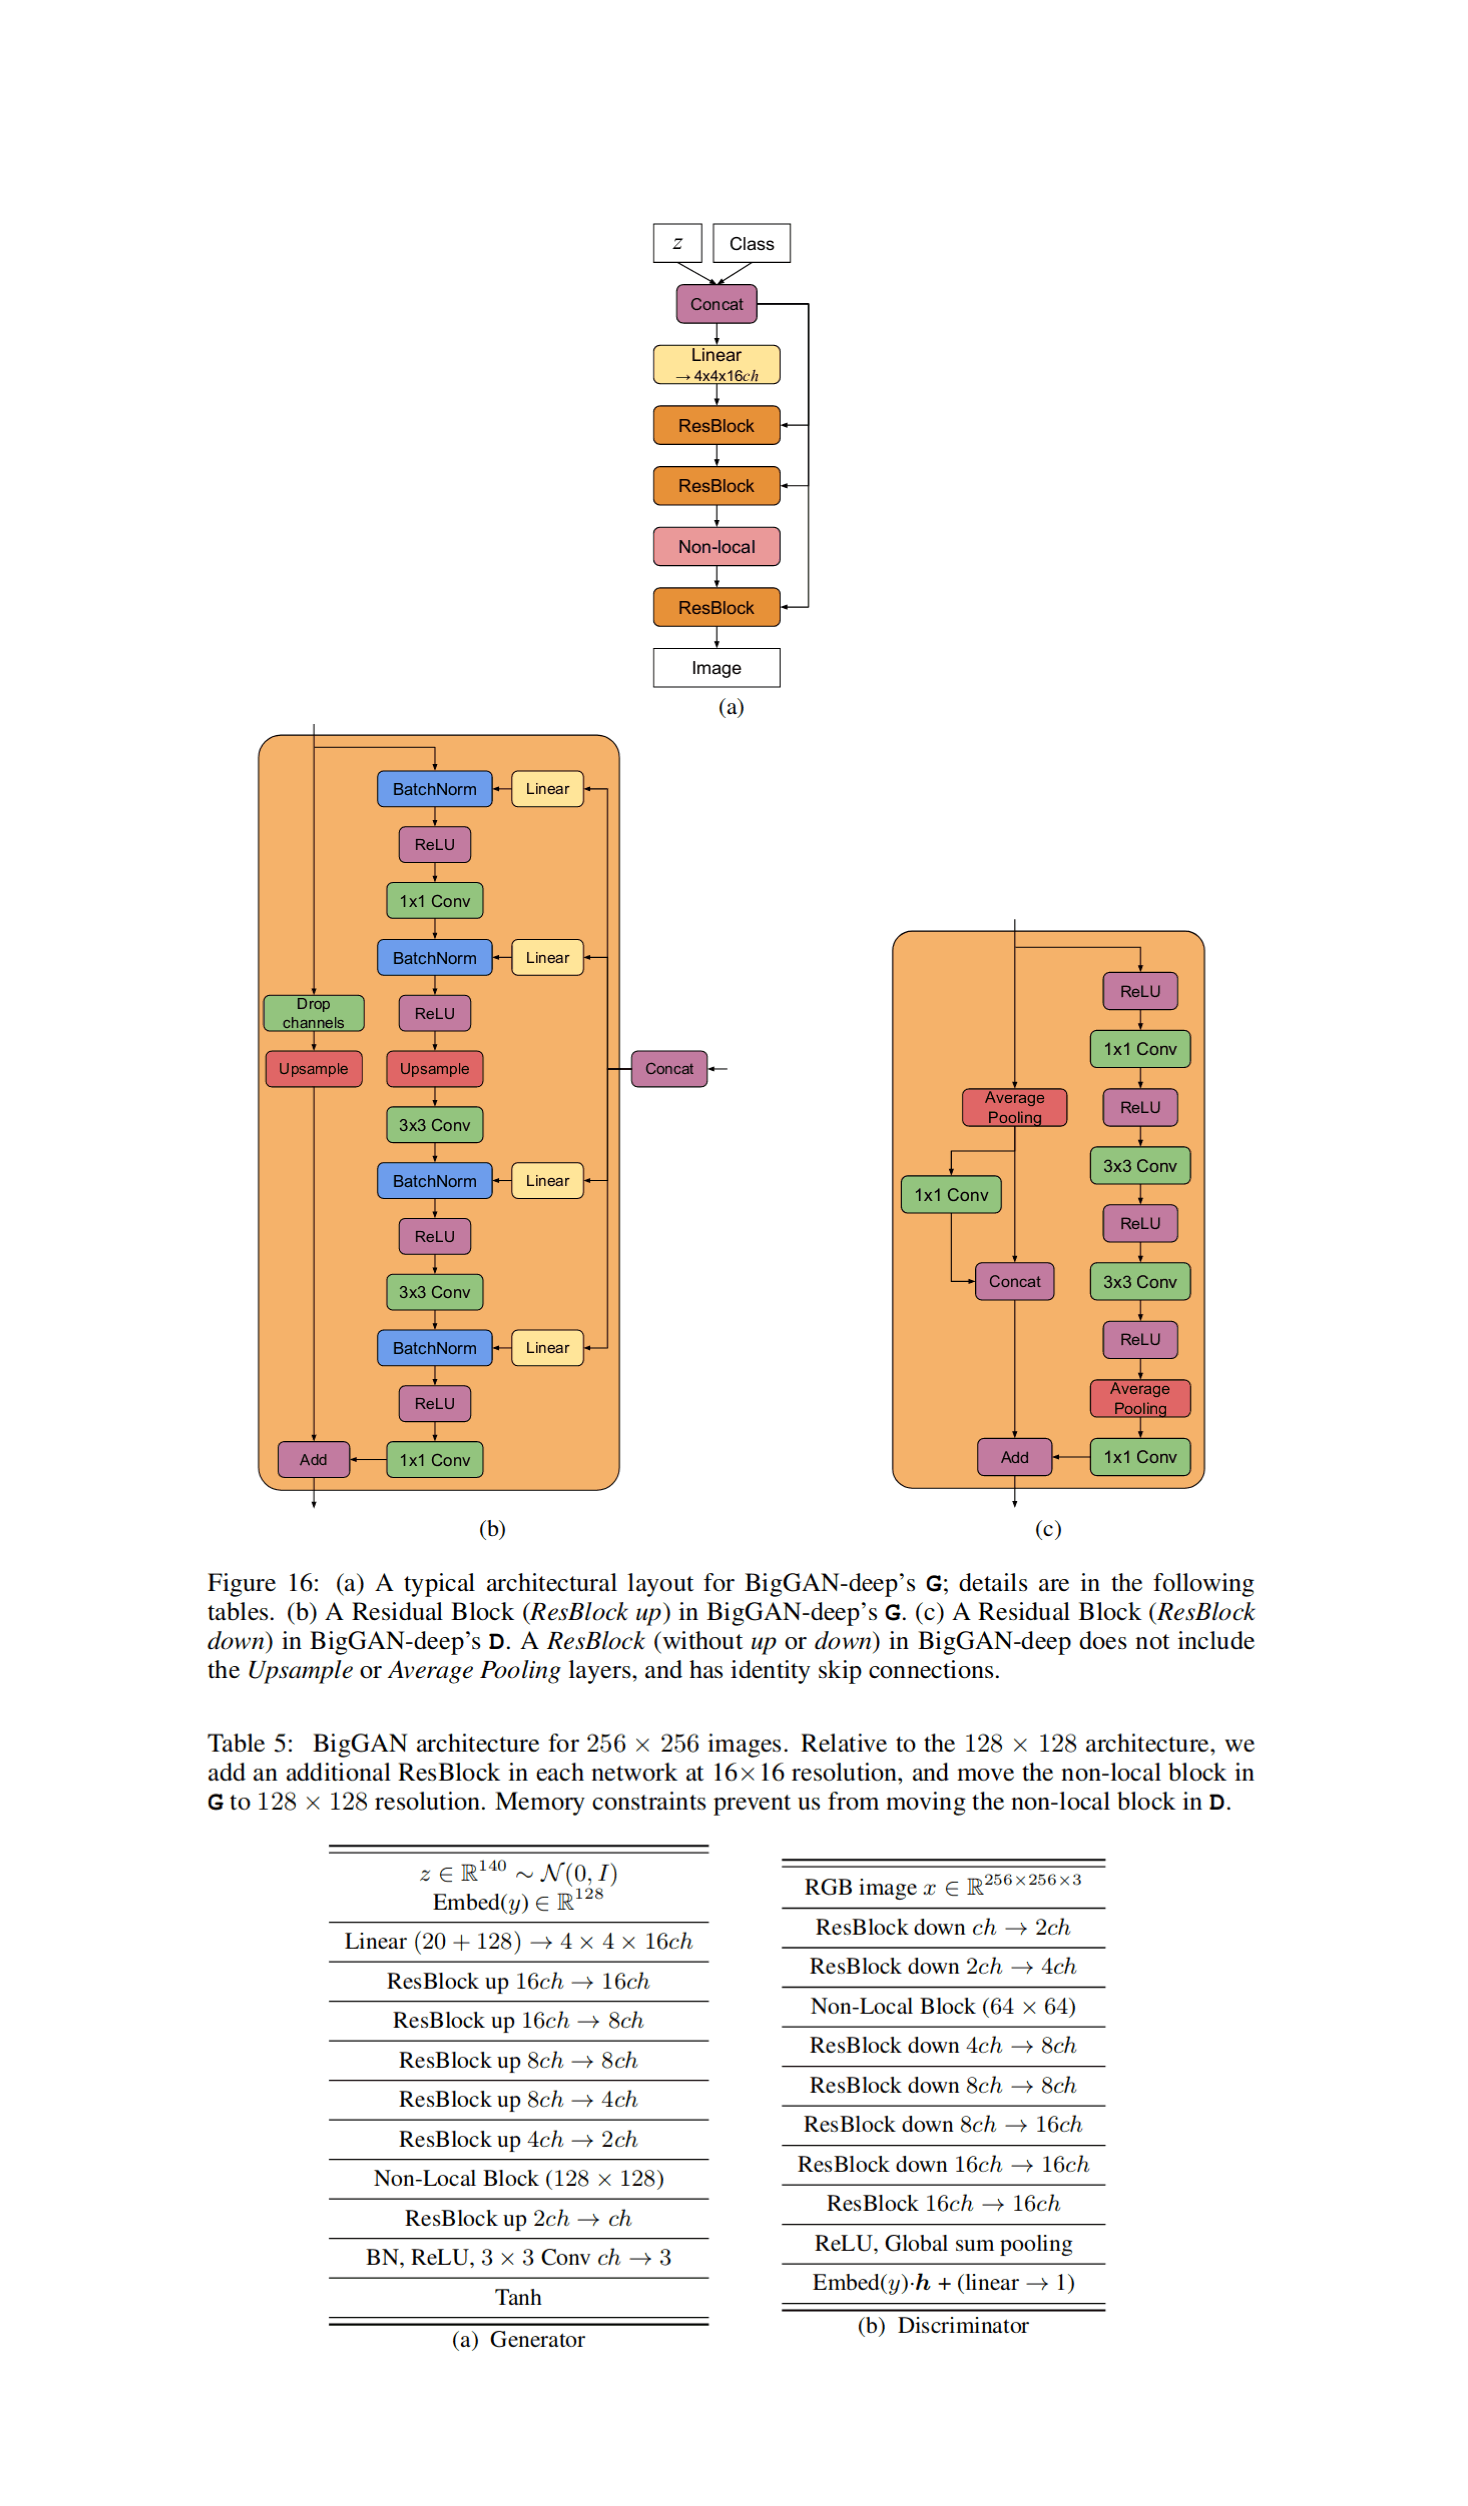 Brock et al 2018: BigGAN-deep architecture (Figure 16, Table 5)